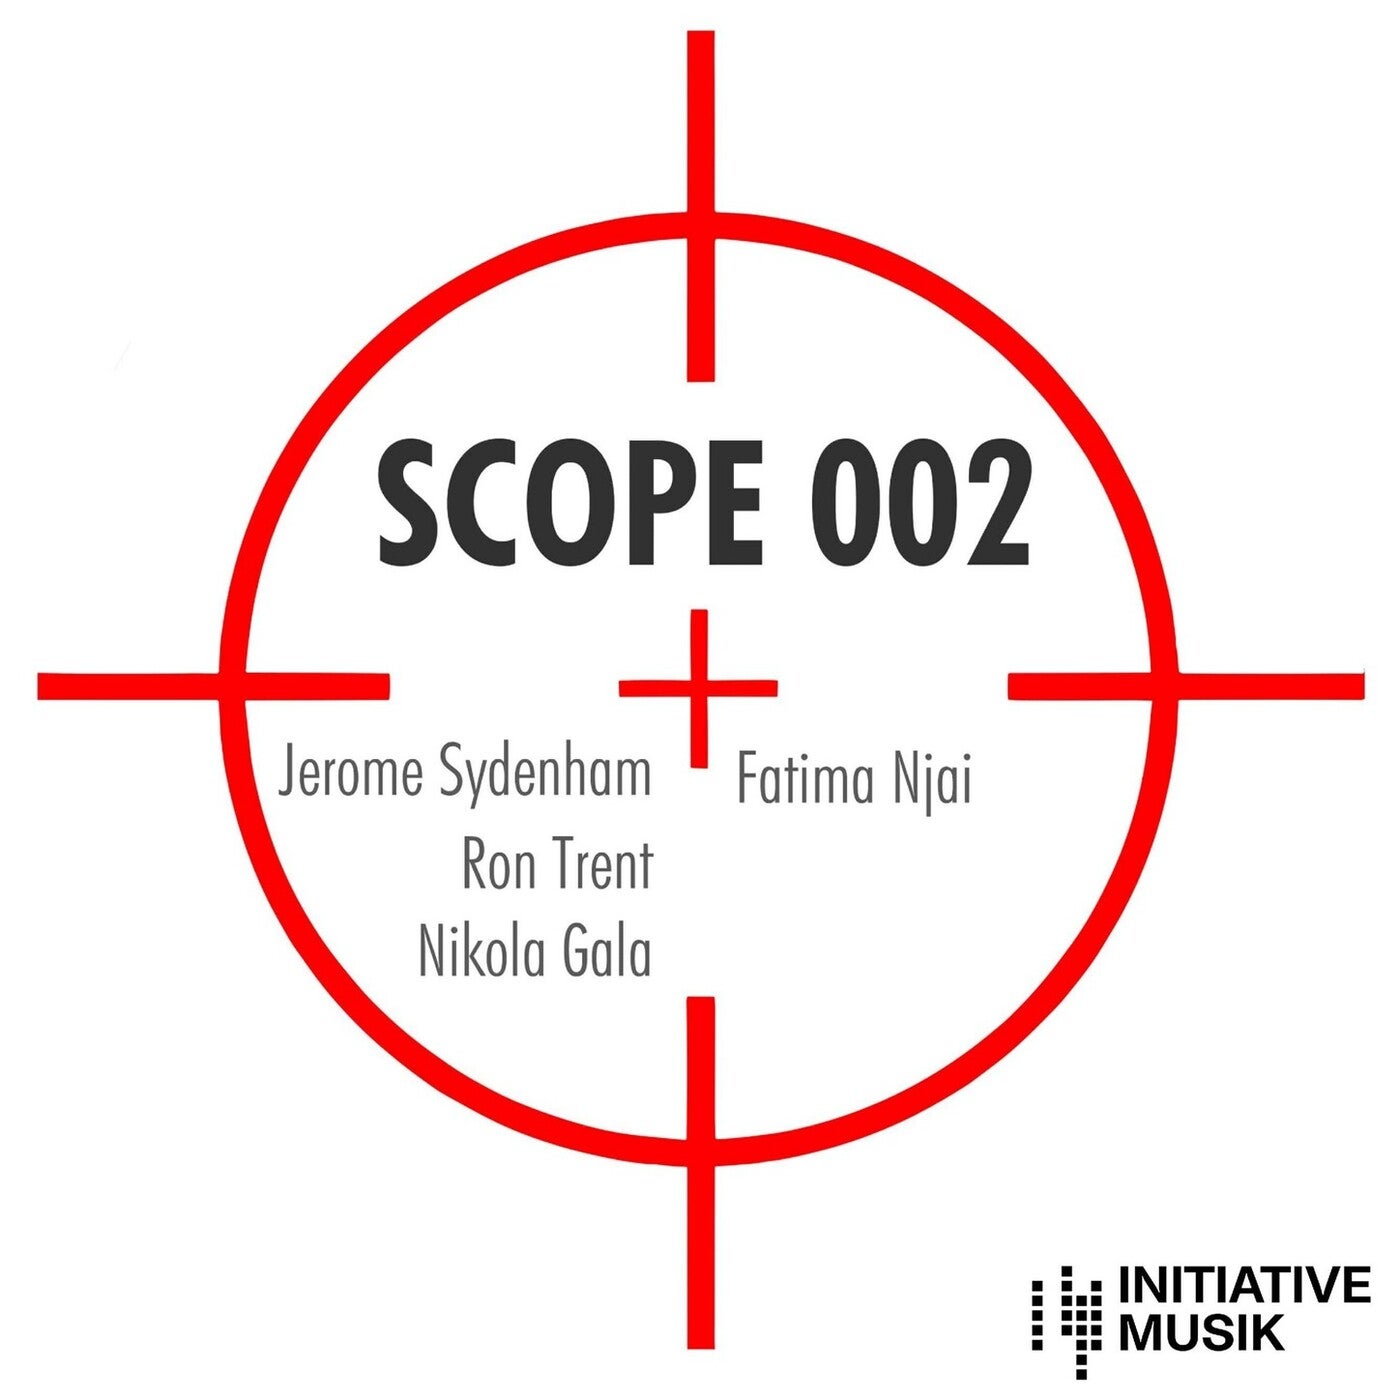 Scope 002